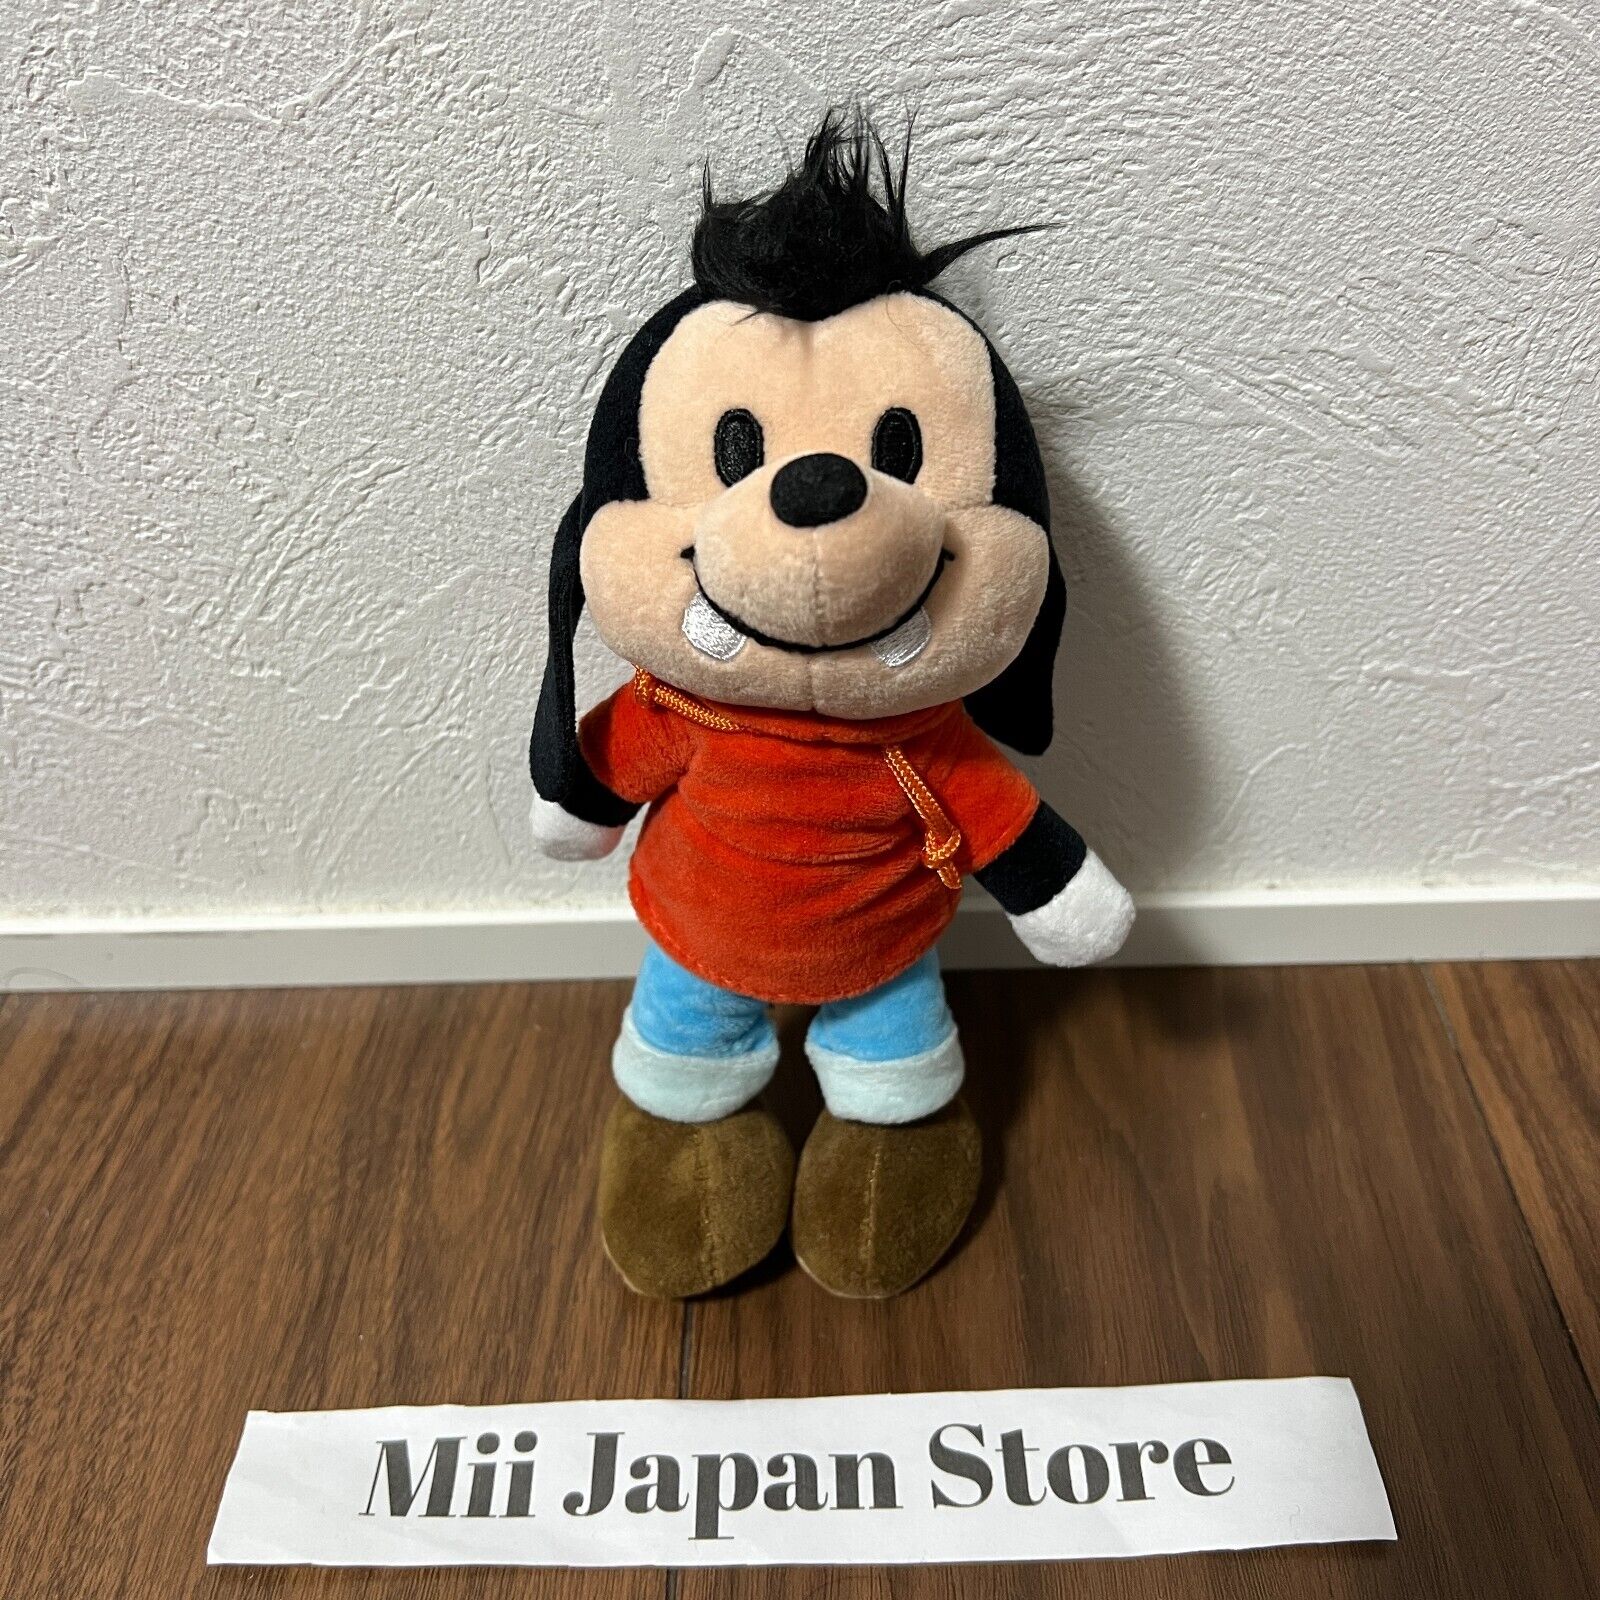 Disney Store Japan nuiMOs Max Plush Doll 7.0 inch Stuffed Toy Goofy Troop Japan